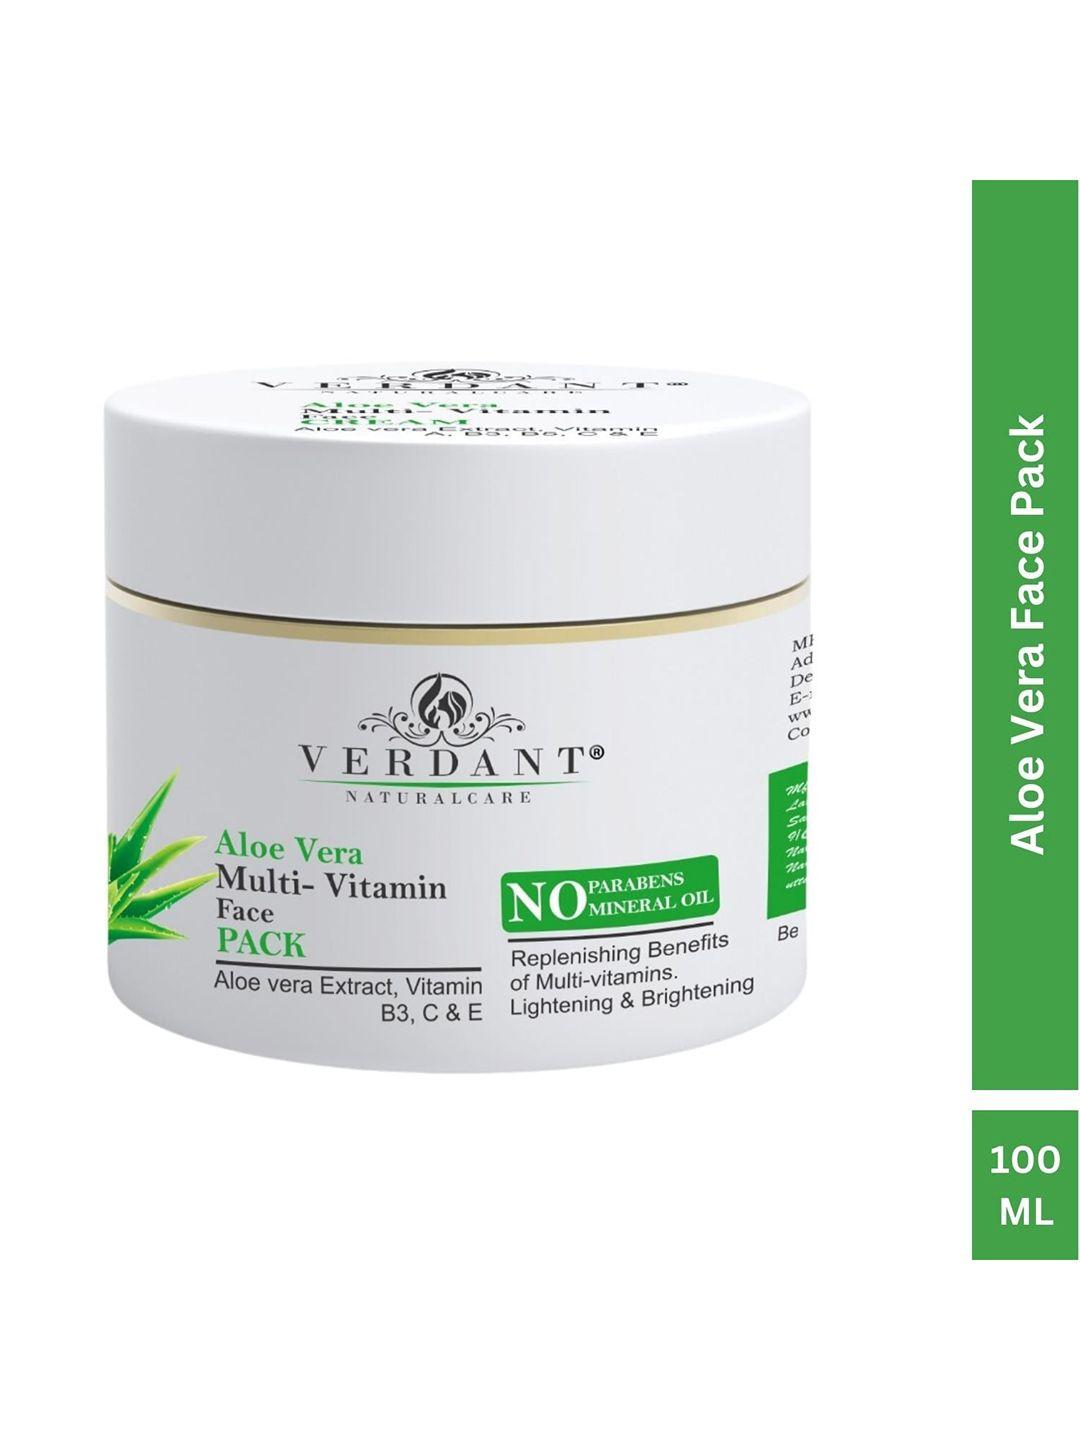 verdant natural care aloe vera multi-vitamin face pack-100 ml